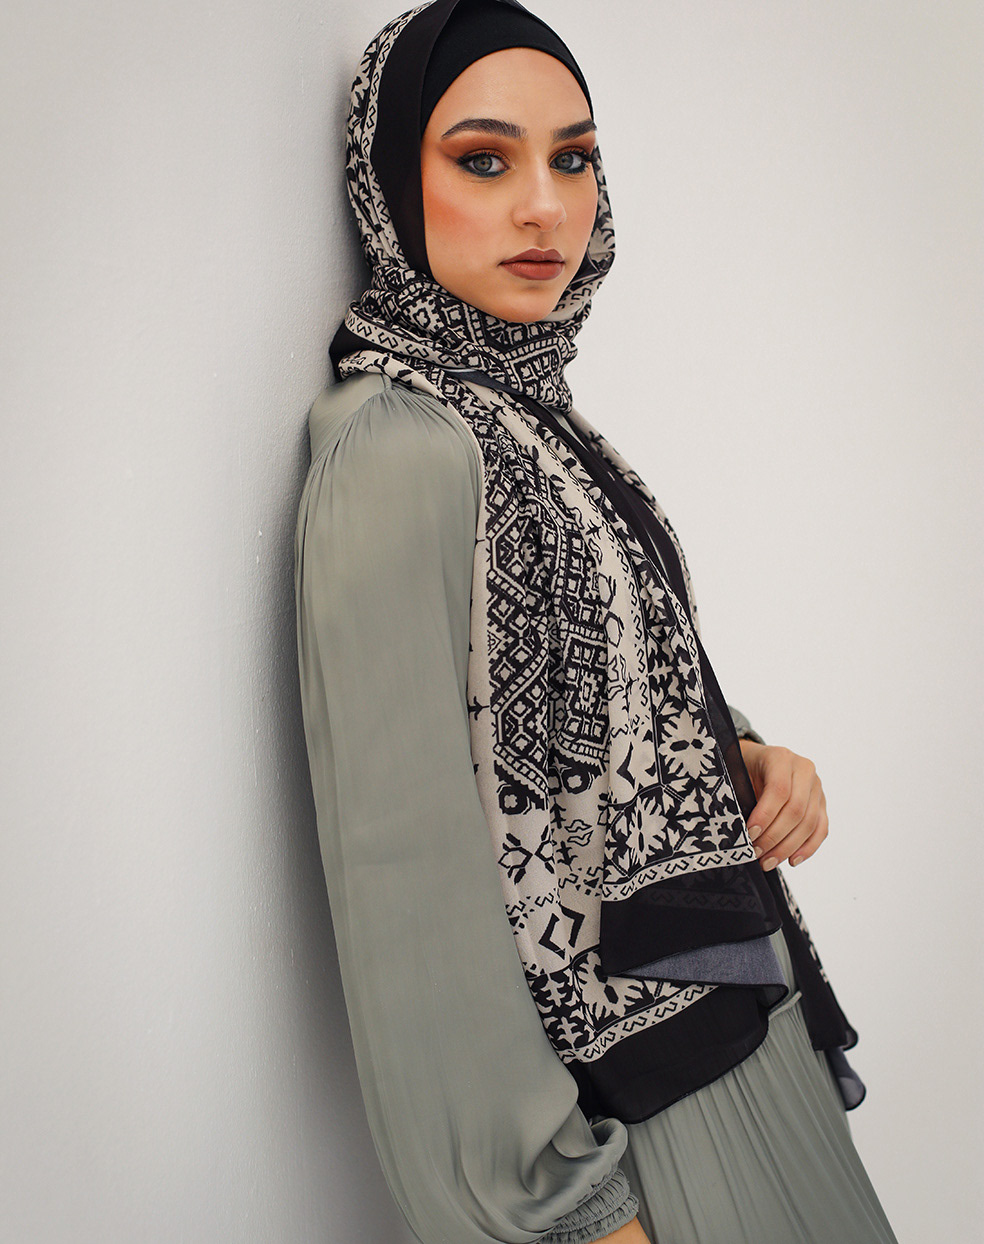 Clothing hijab Hijab Fashion pattern scarf scarf design scarves textile fabric print